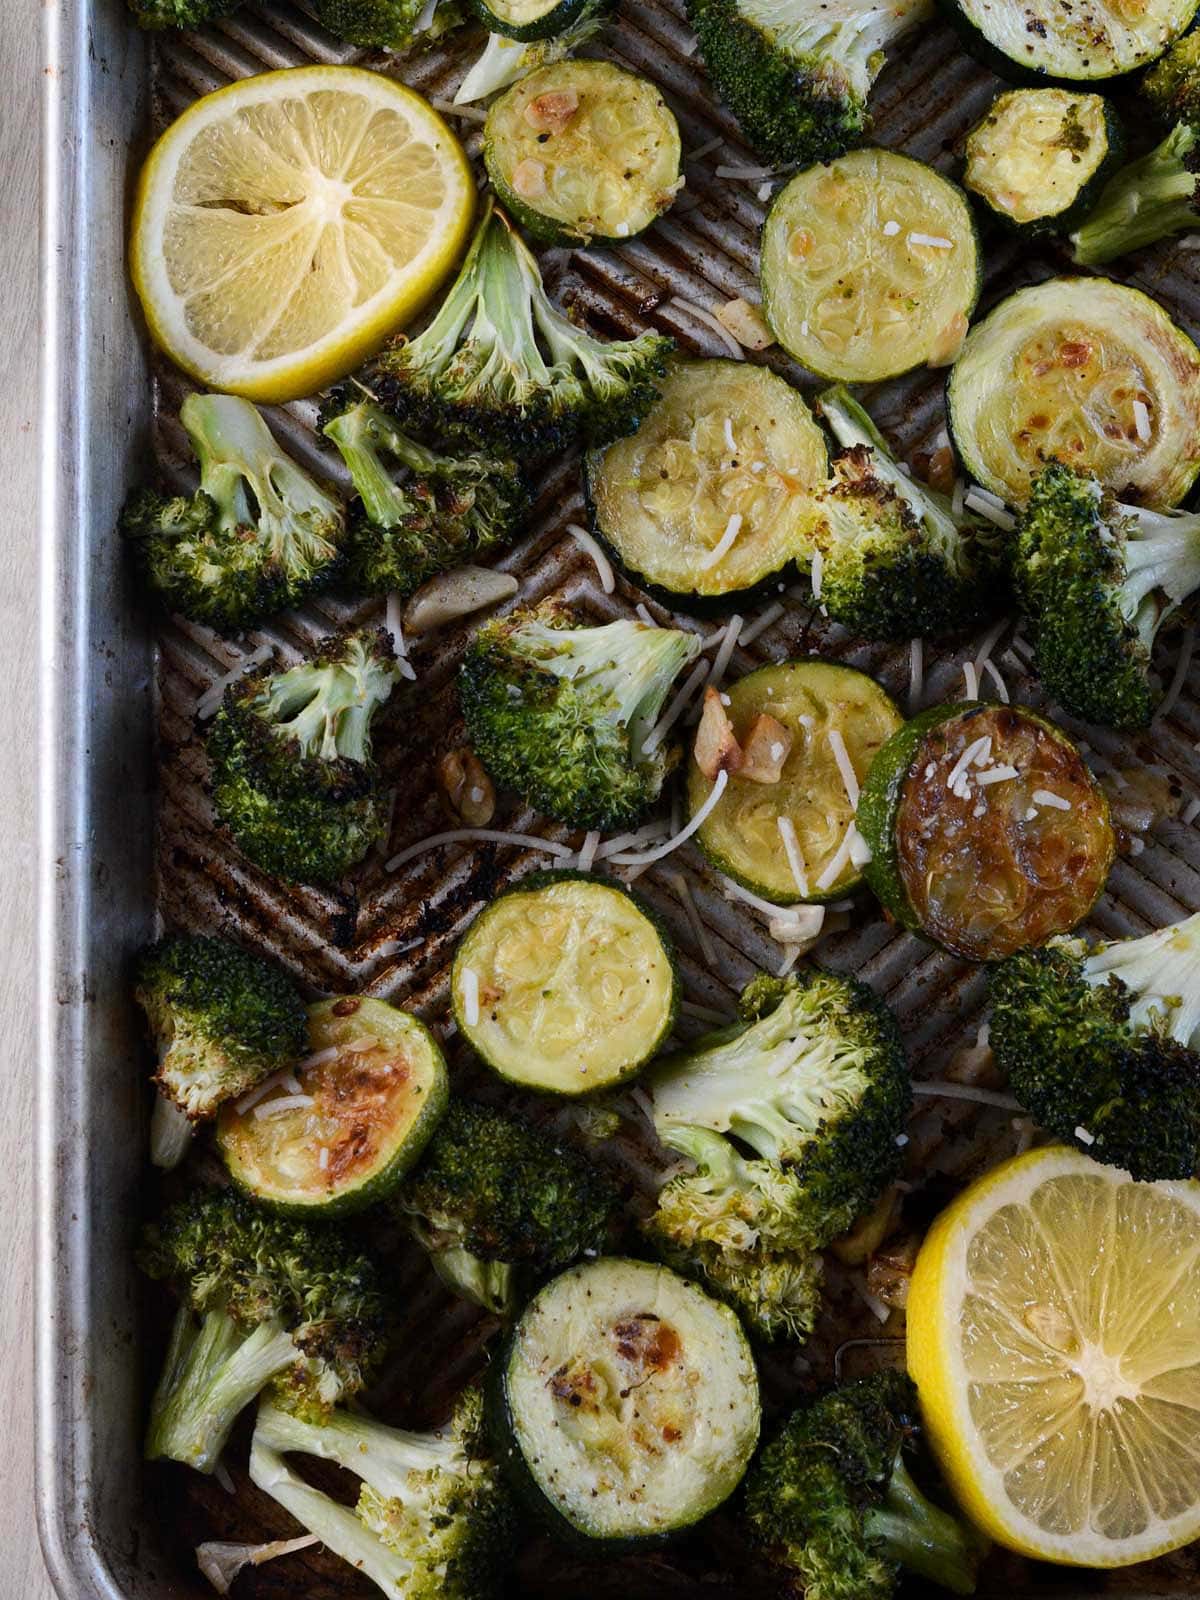 Roasted Broccoli & Zucchini with Lemon & Garlic